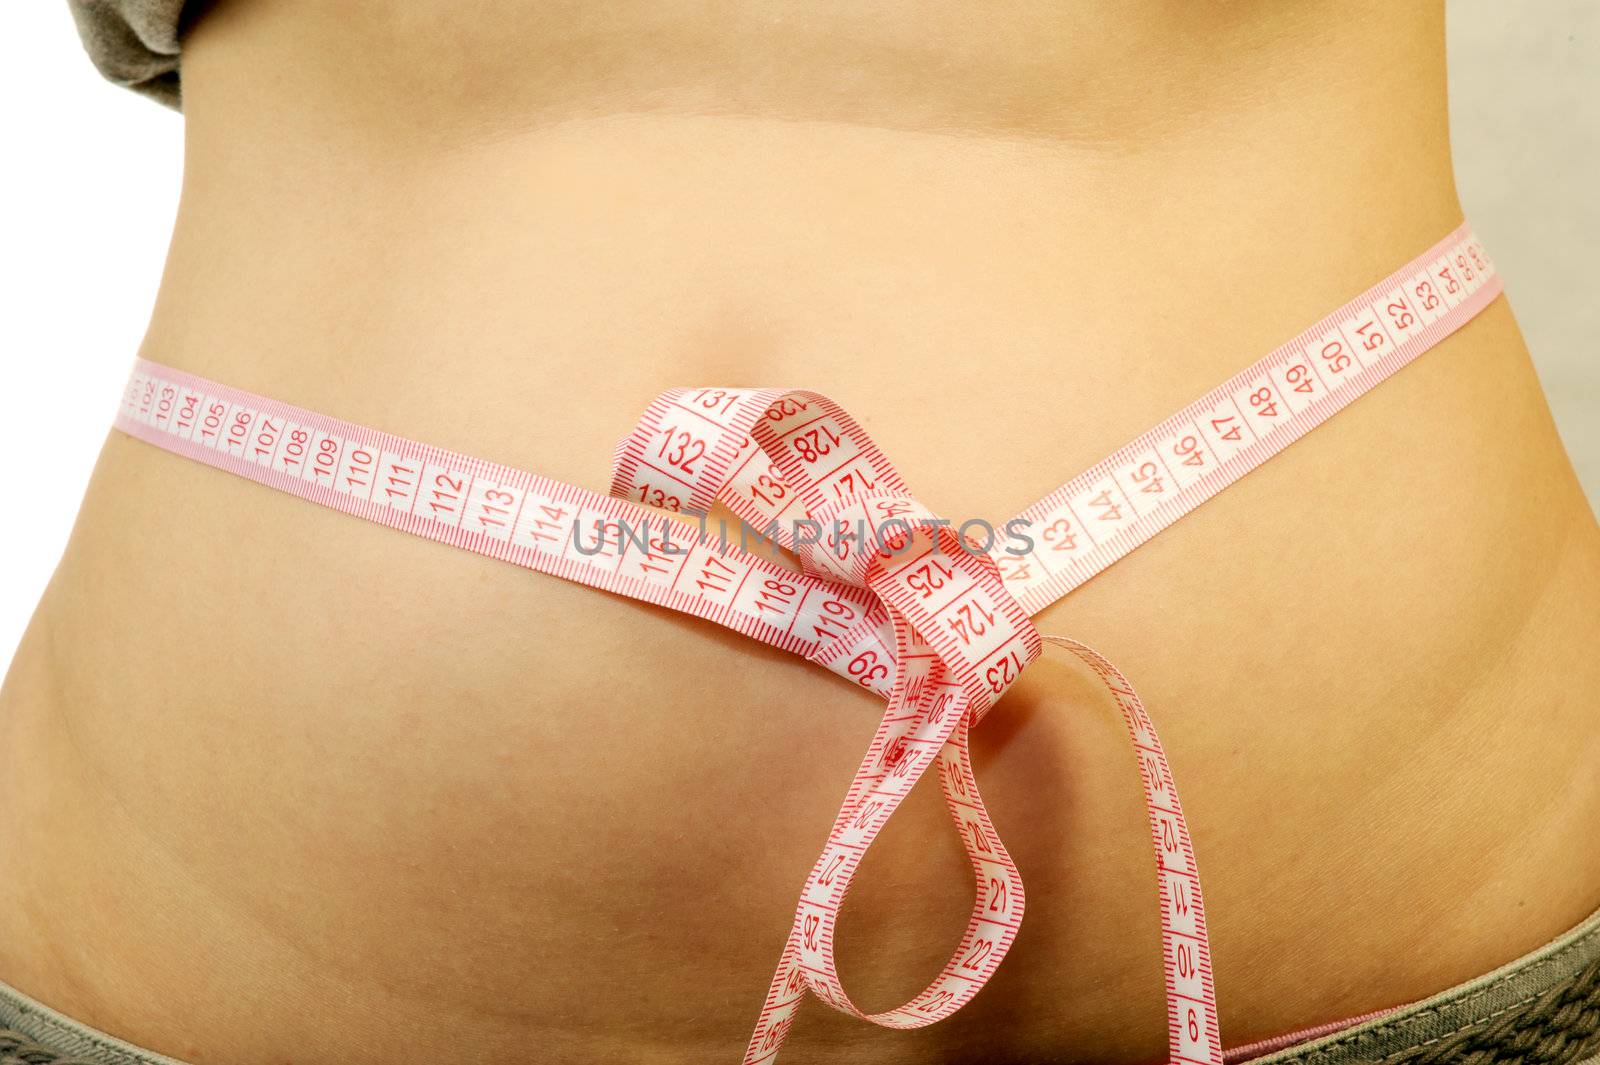 White woman obese waist, taken as close up